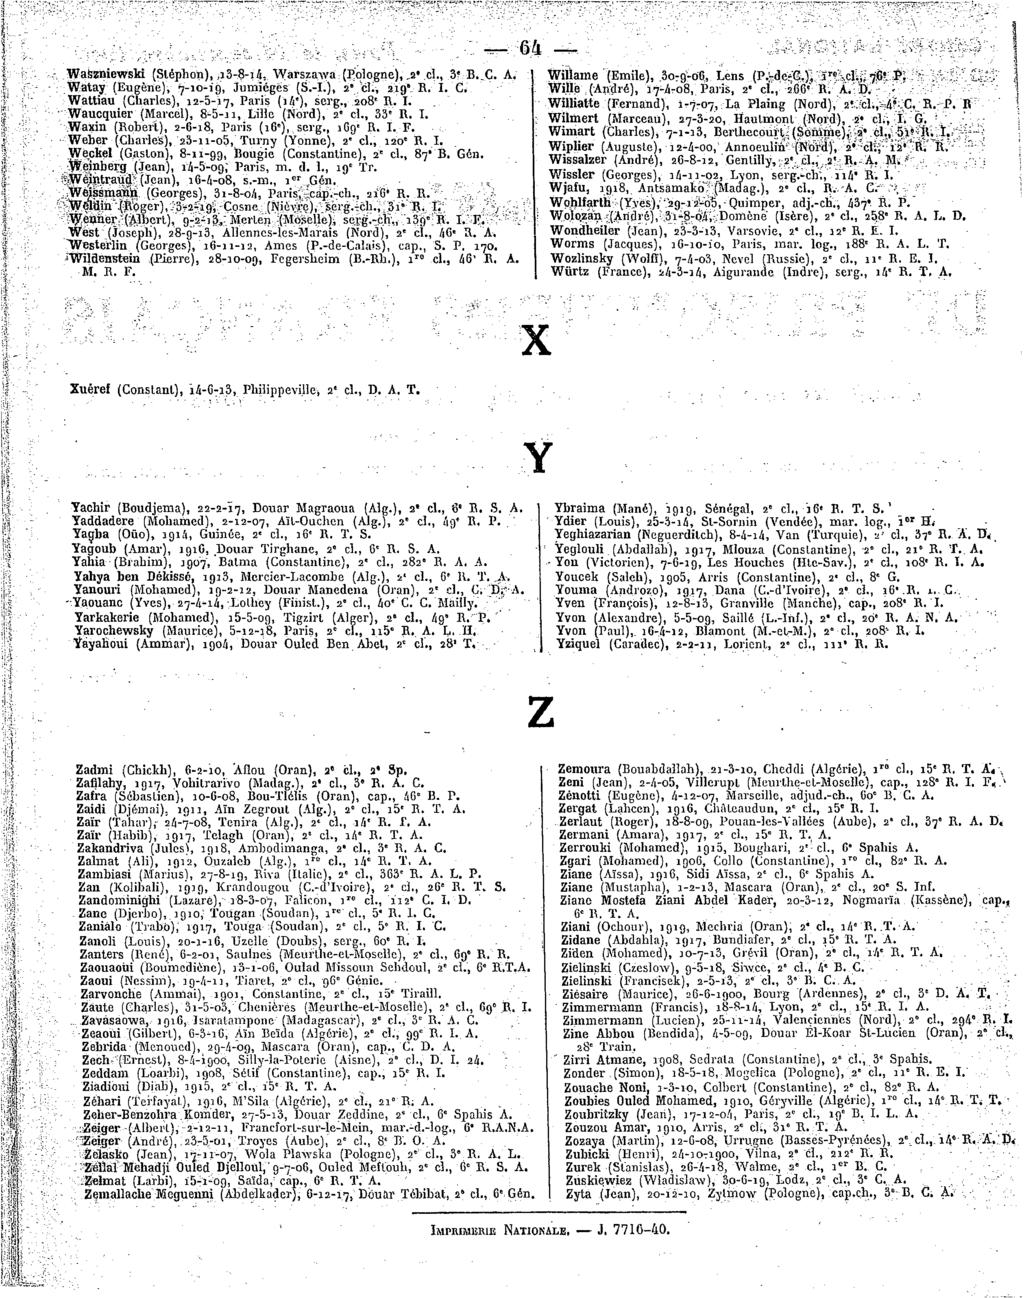 &4 Wabzmewslri (Slépbon),,i3-8-i4,Warszawi (Pologne),,2 d.,,3?.-b..ç. A, WiUame(Emile), 3o-g-o6, Lens(P.-de-C), ïrc cl.,r76"p. Wàtay(Eugène), 7-30-39, Jumiégës(S.-L),2 ch,ai'g*. R.I. C, Wiïl.